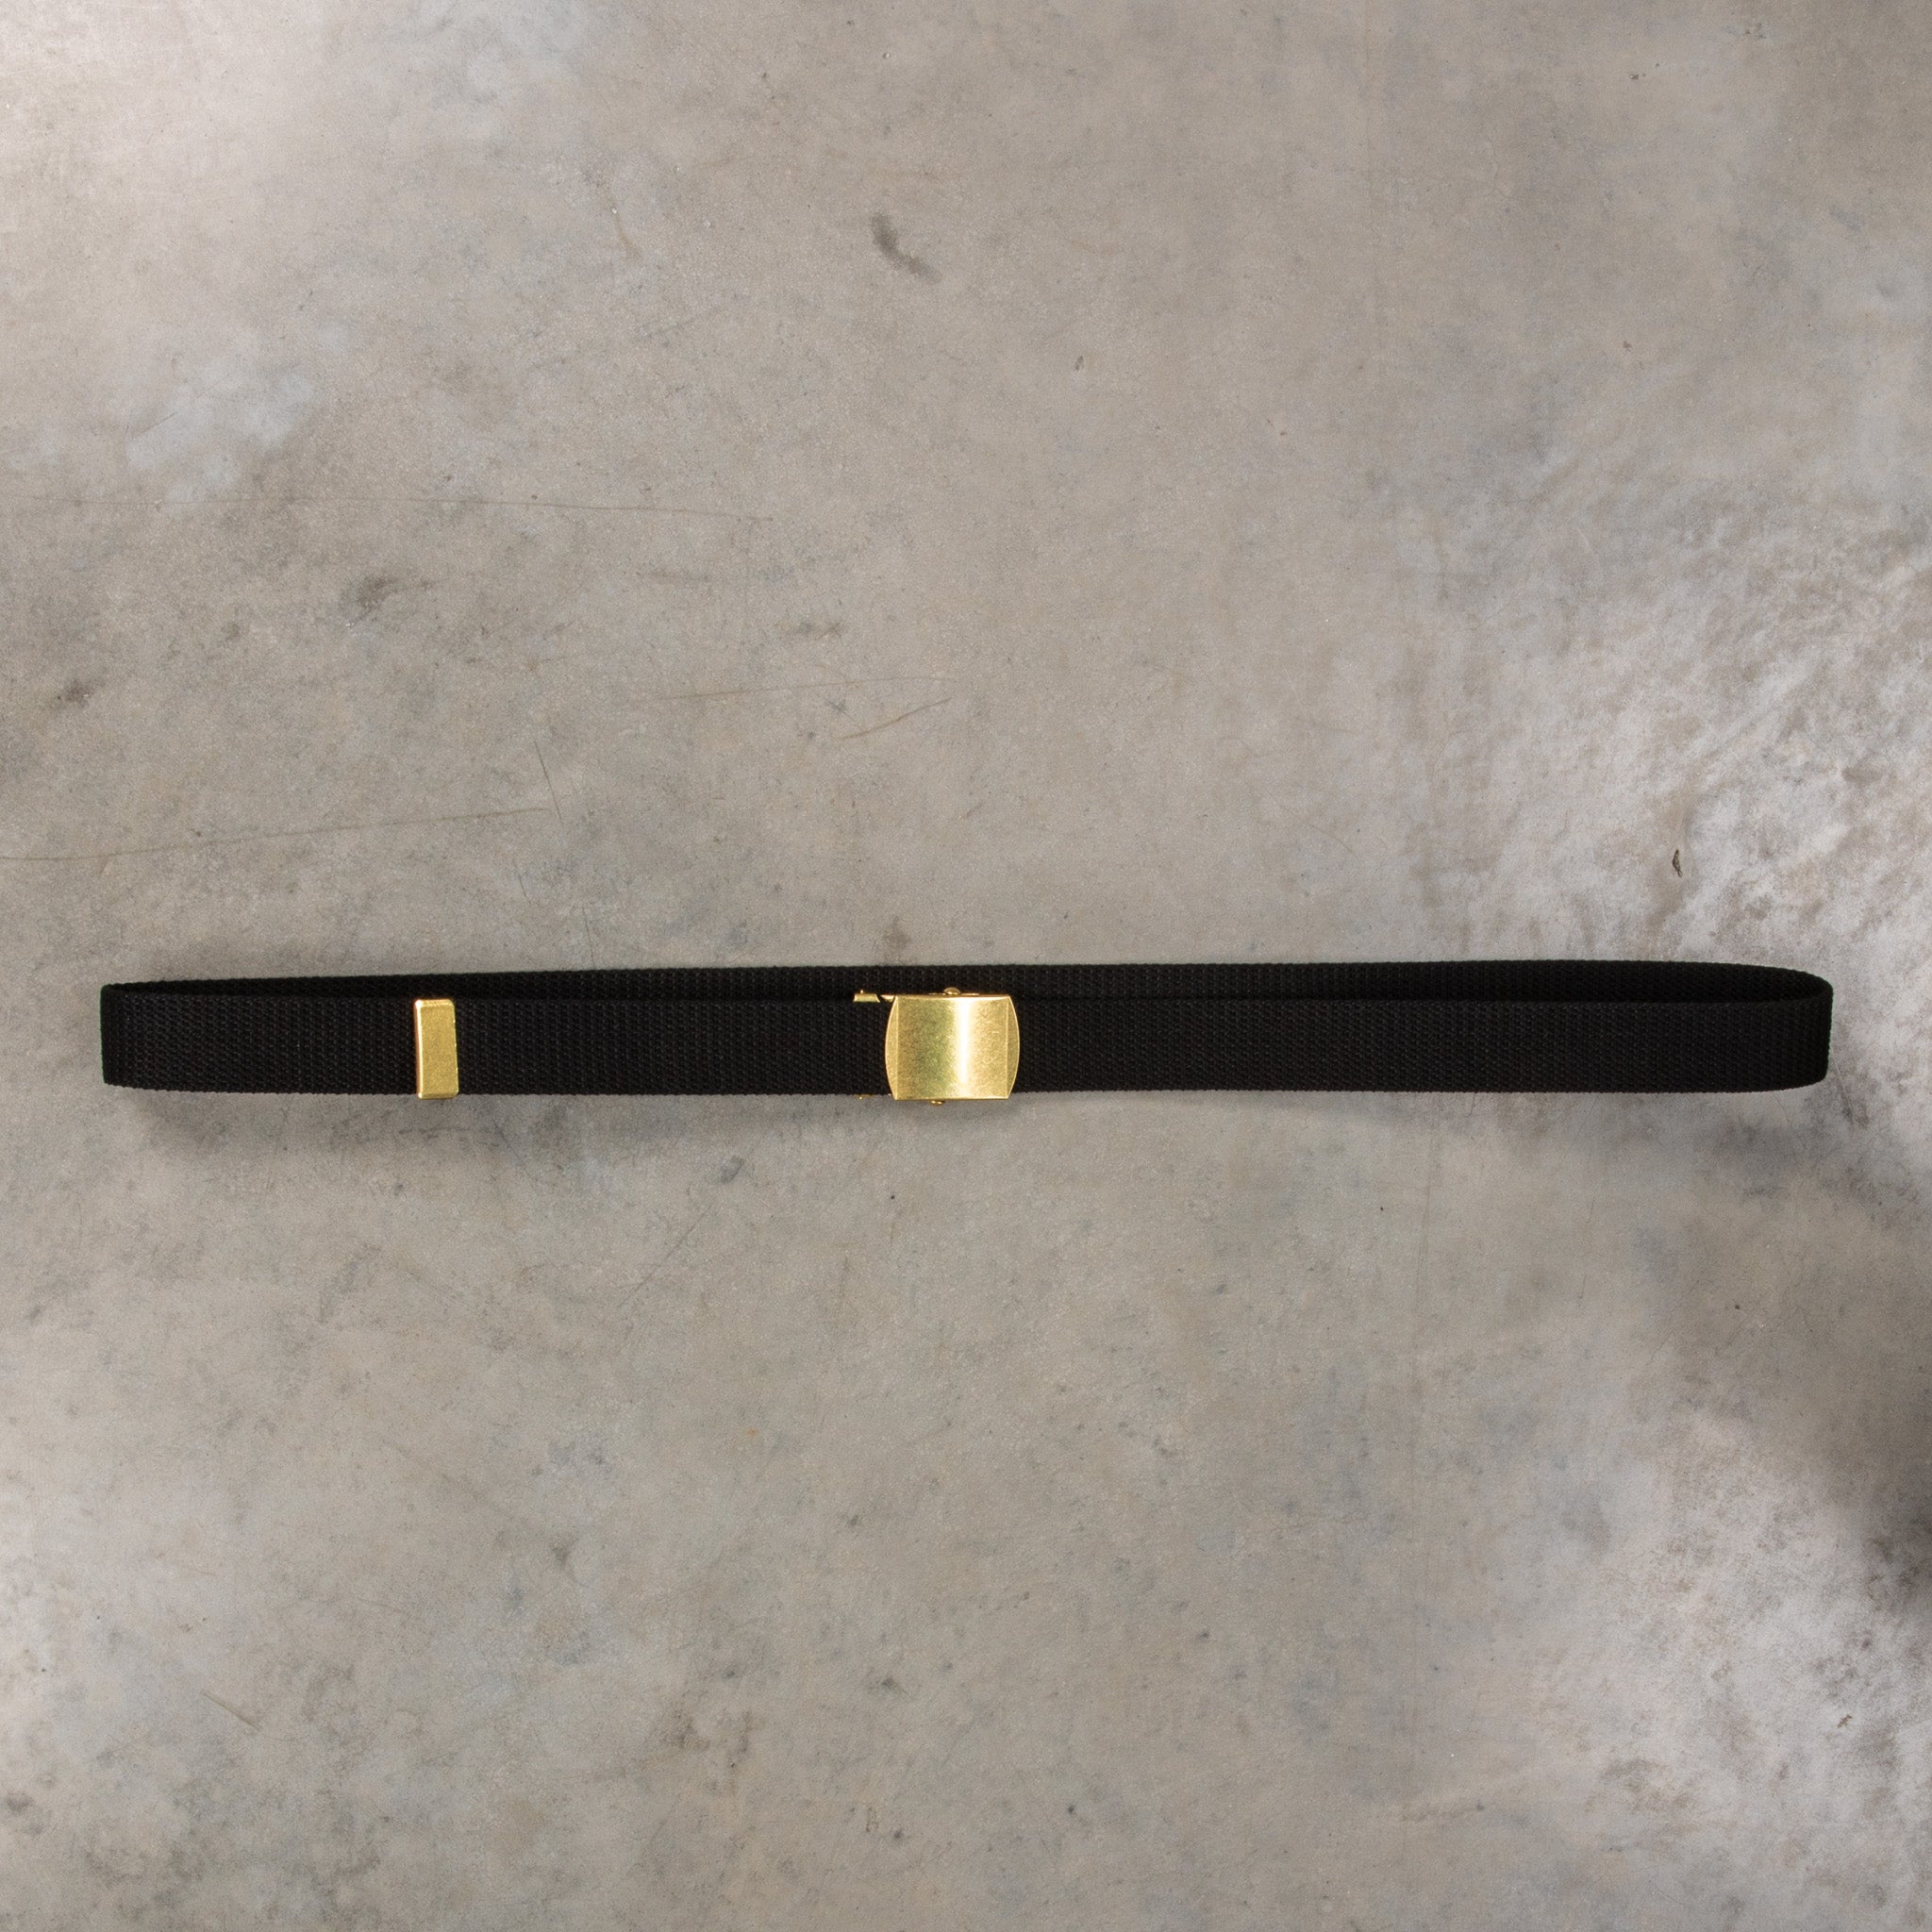 The Real McCoy&#39;s Black Trouser Uniform Belt